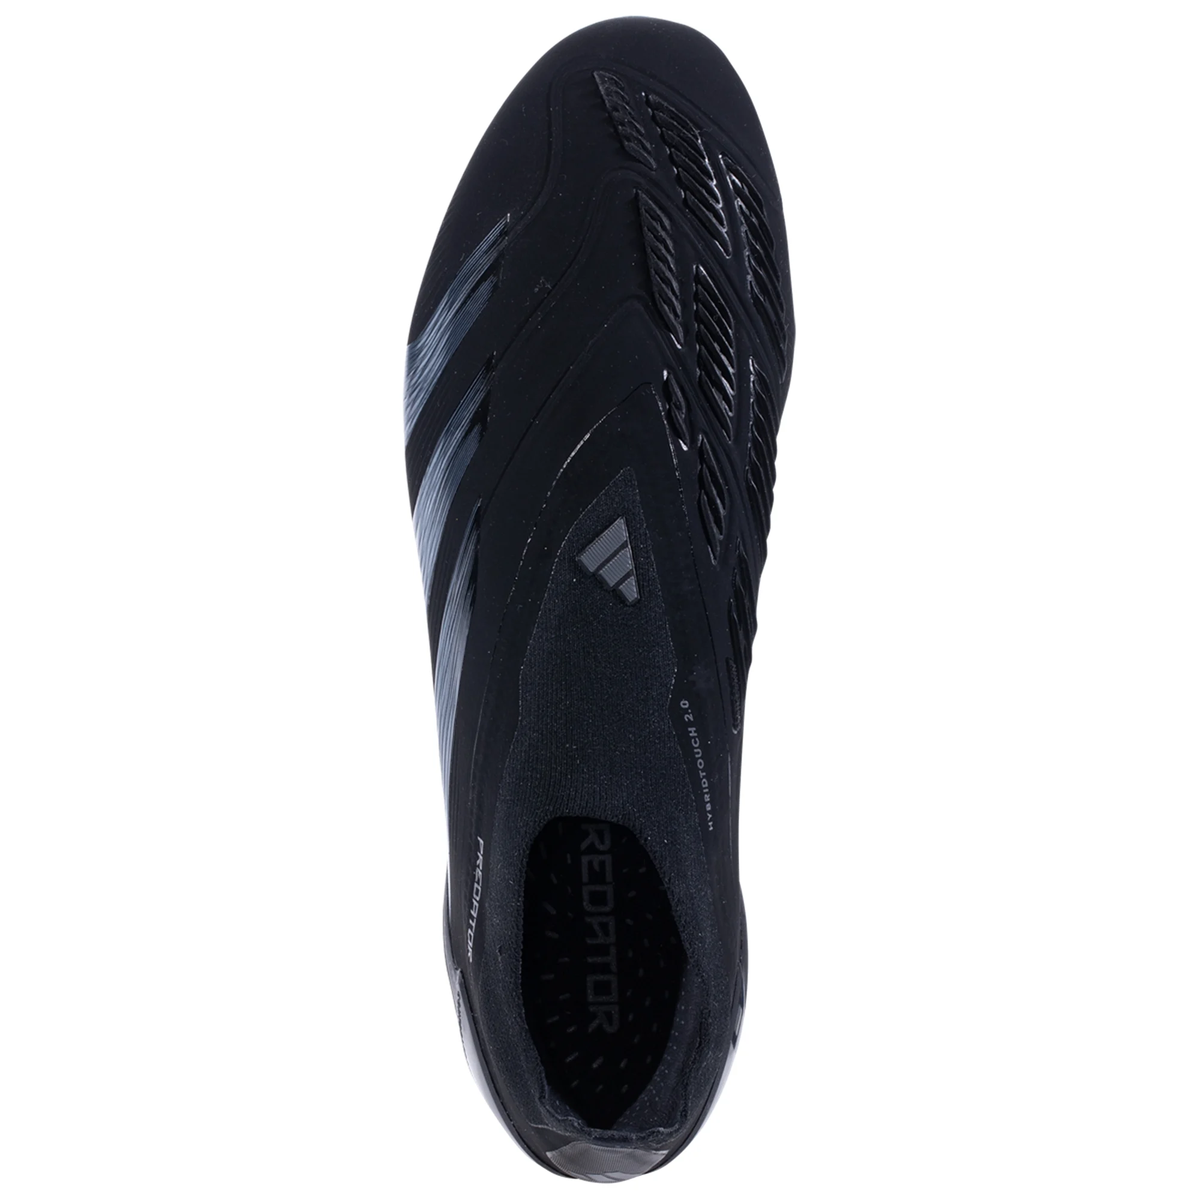 adidas Predator Elite LL Firm Ground Soccer Cleats (Black/Black)